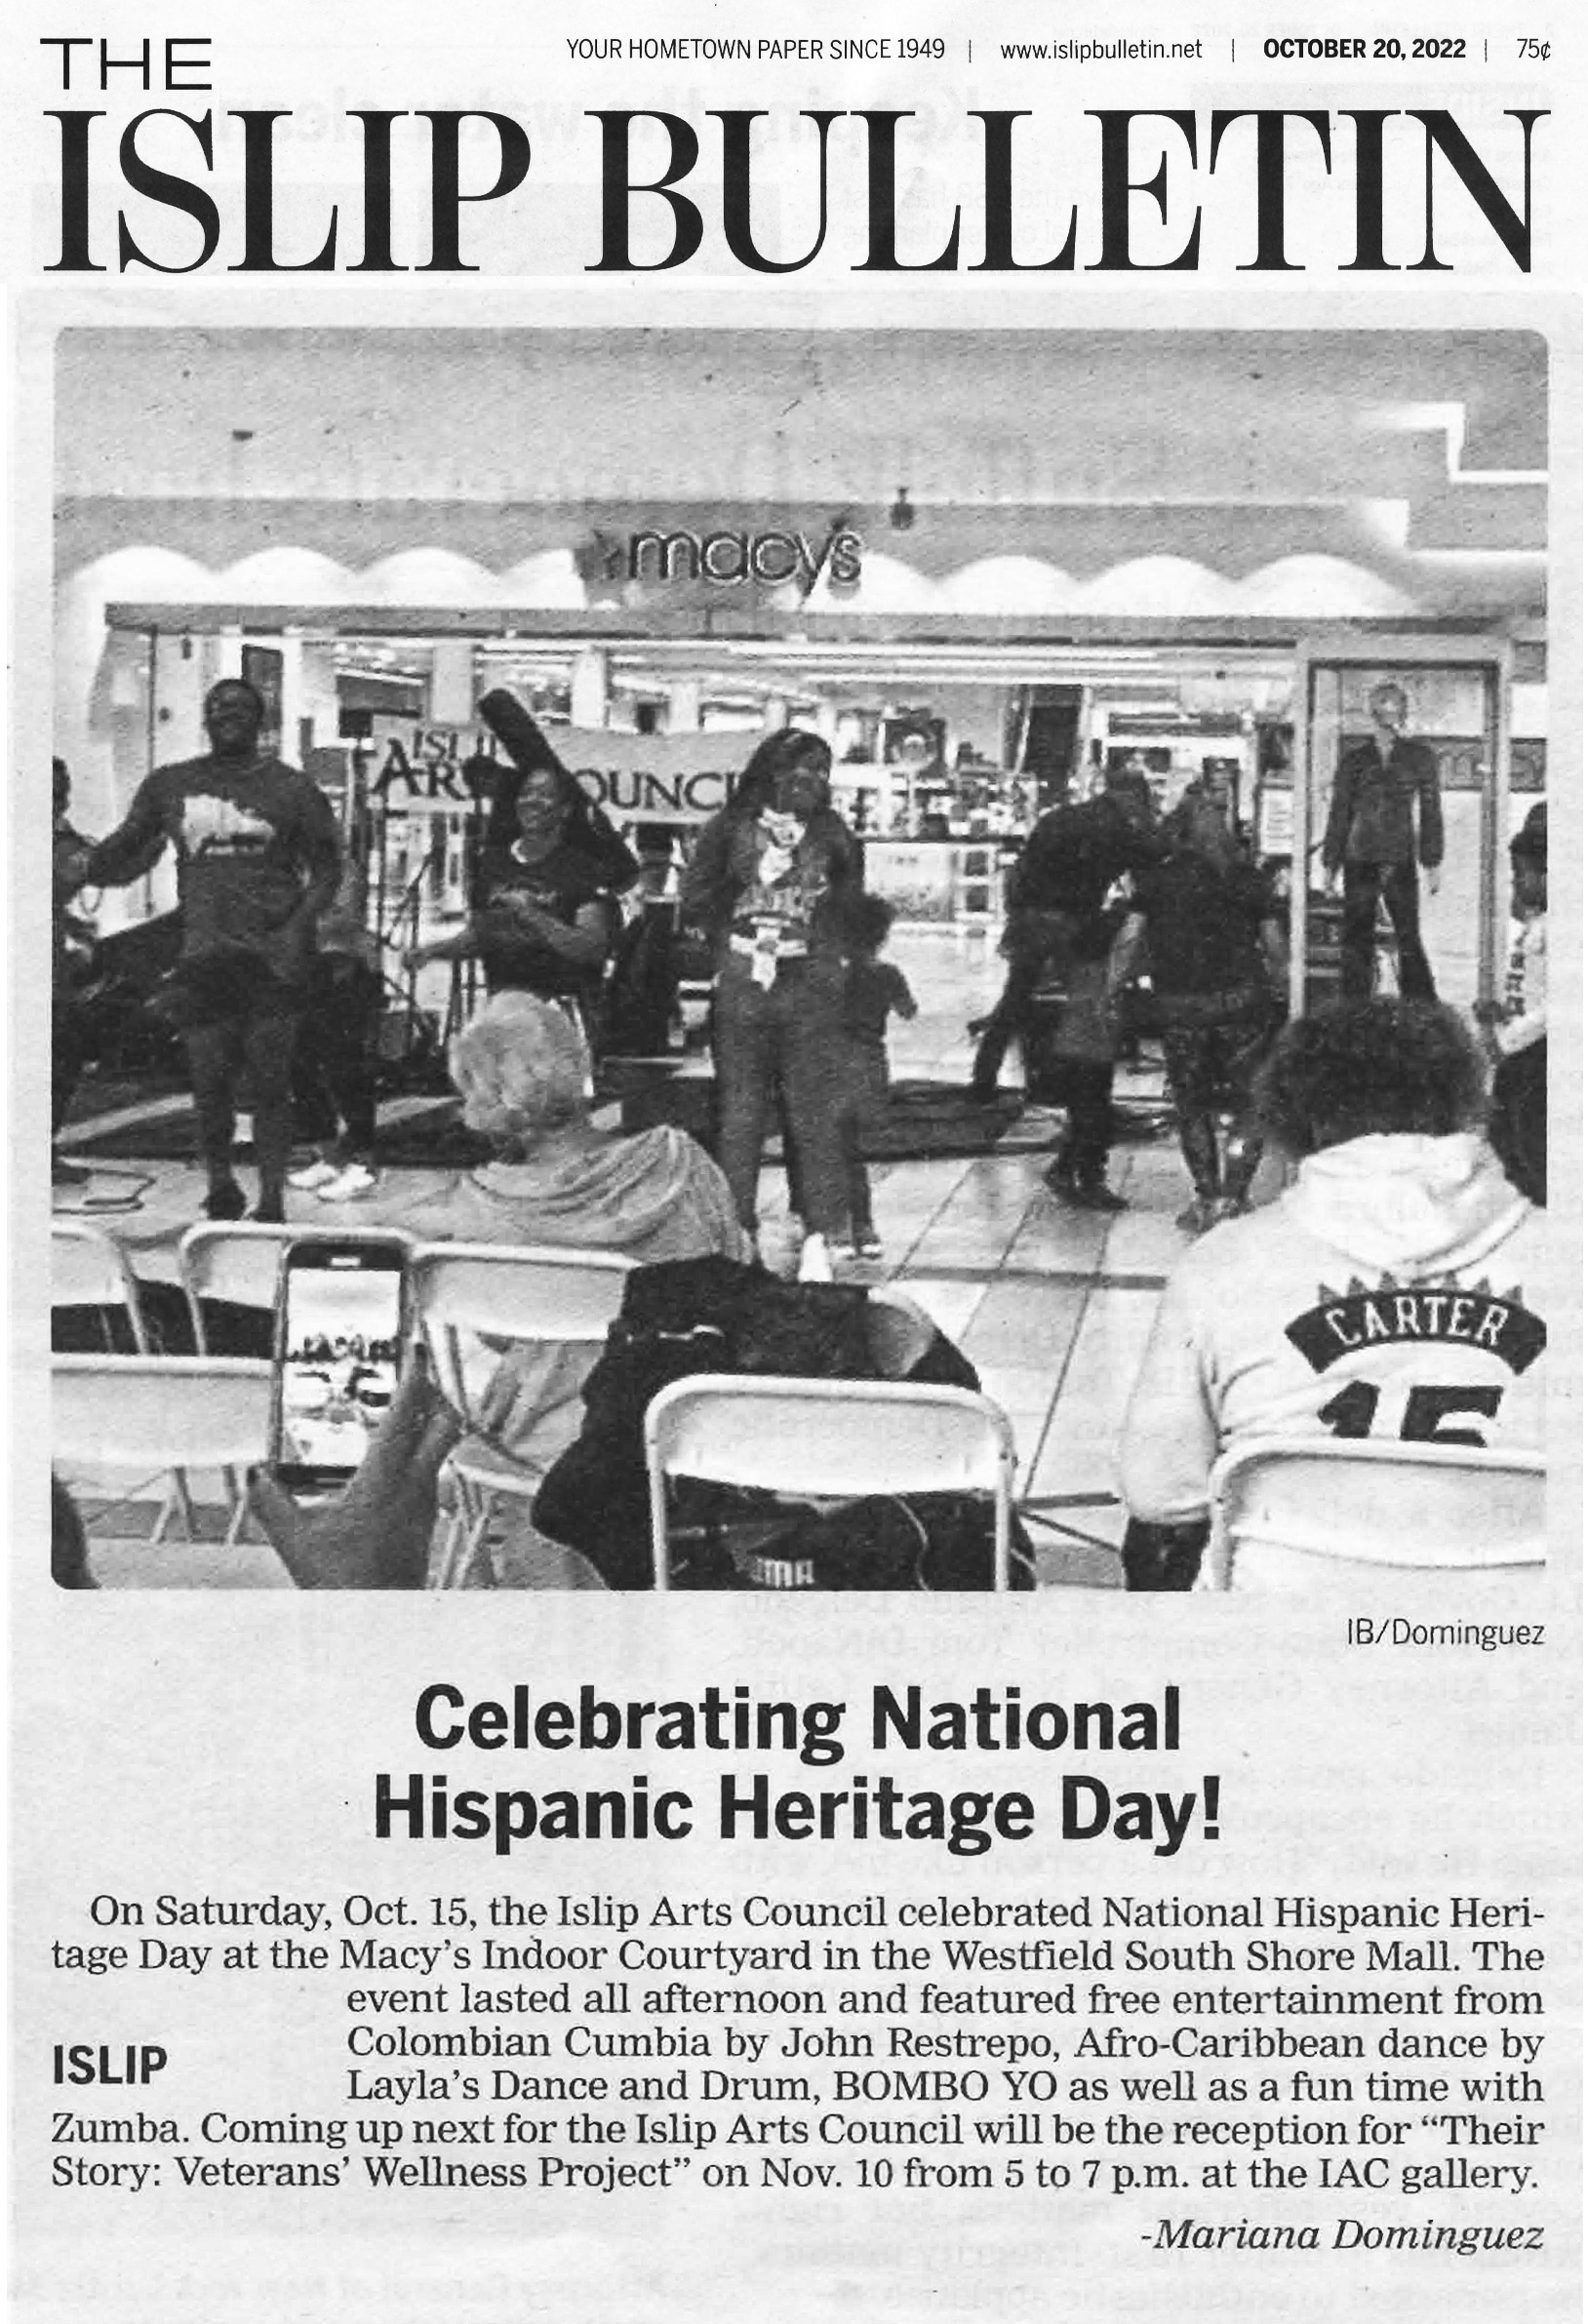 OCT 2022 / Celebration of National Hispanic Heritage Day in Islip Bulletin